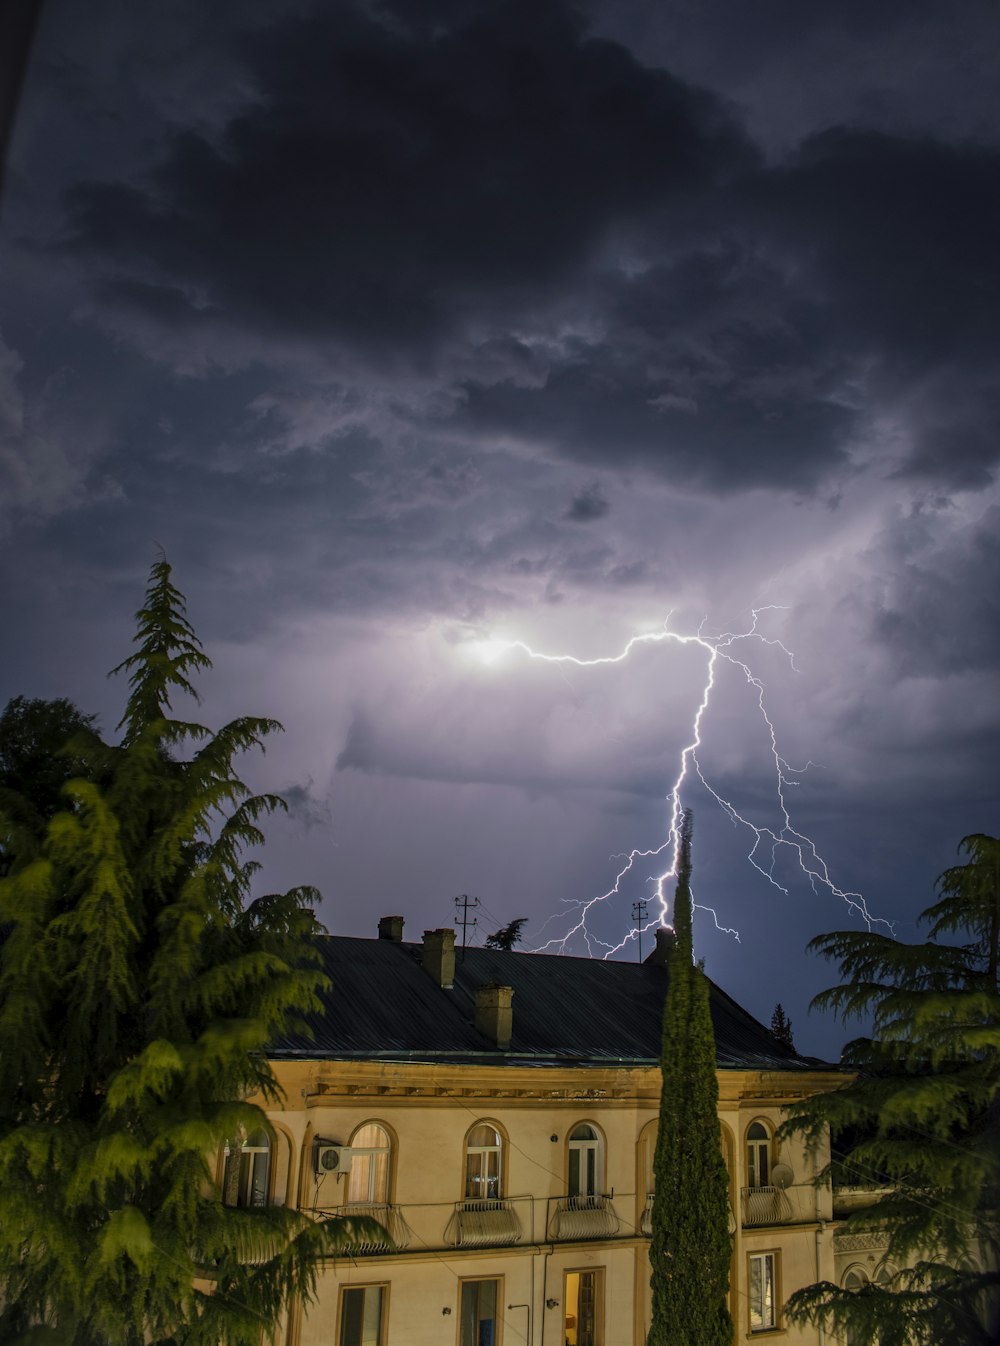 lightning striking a house